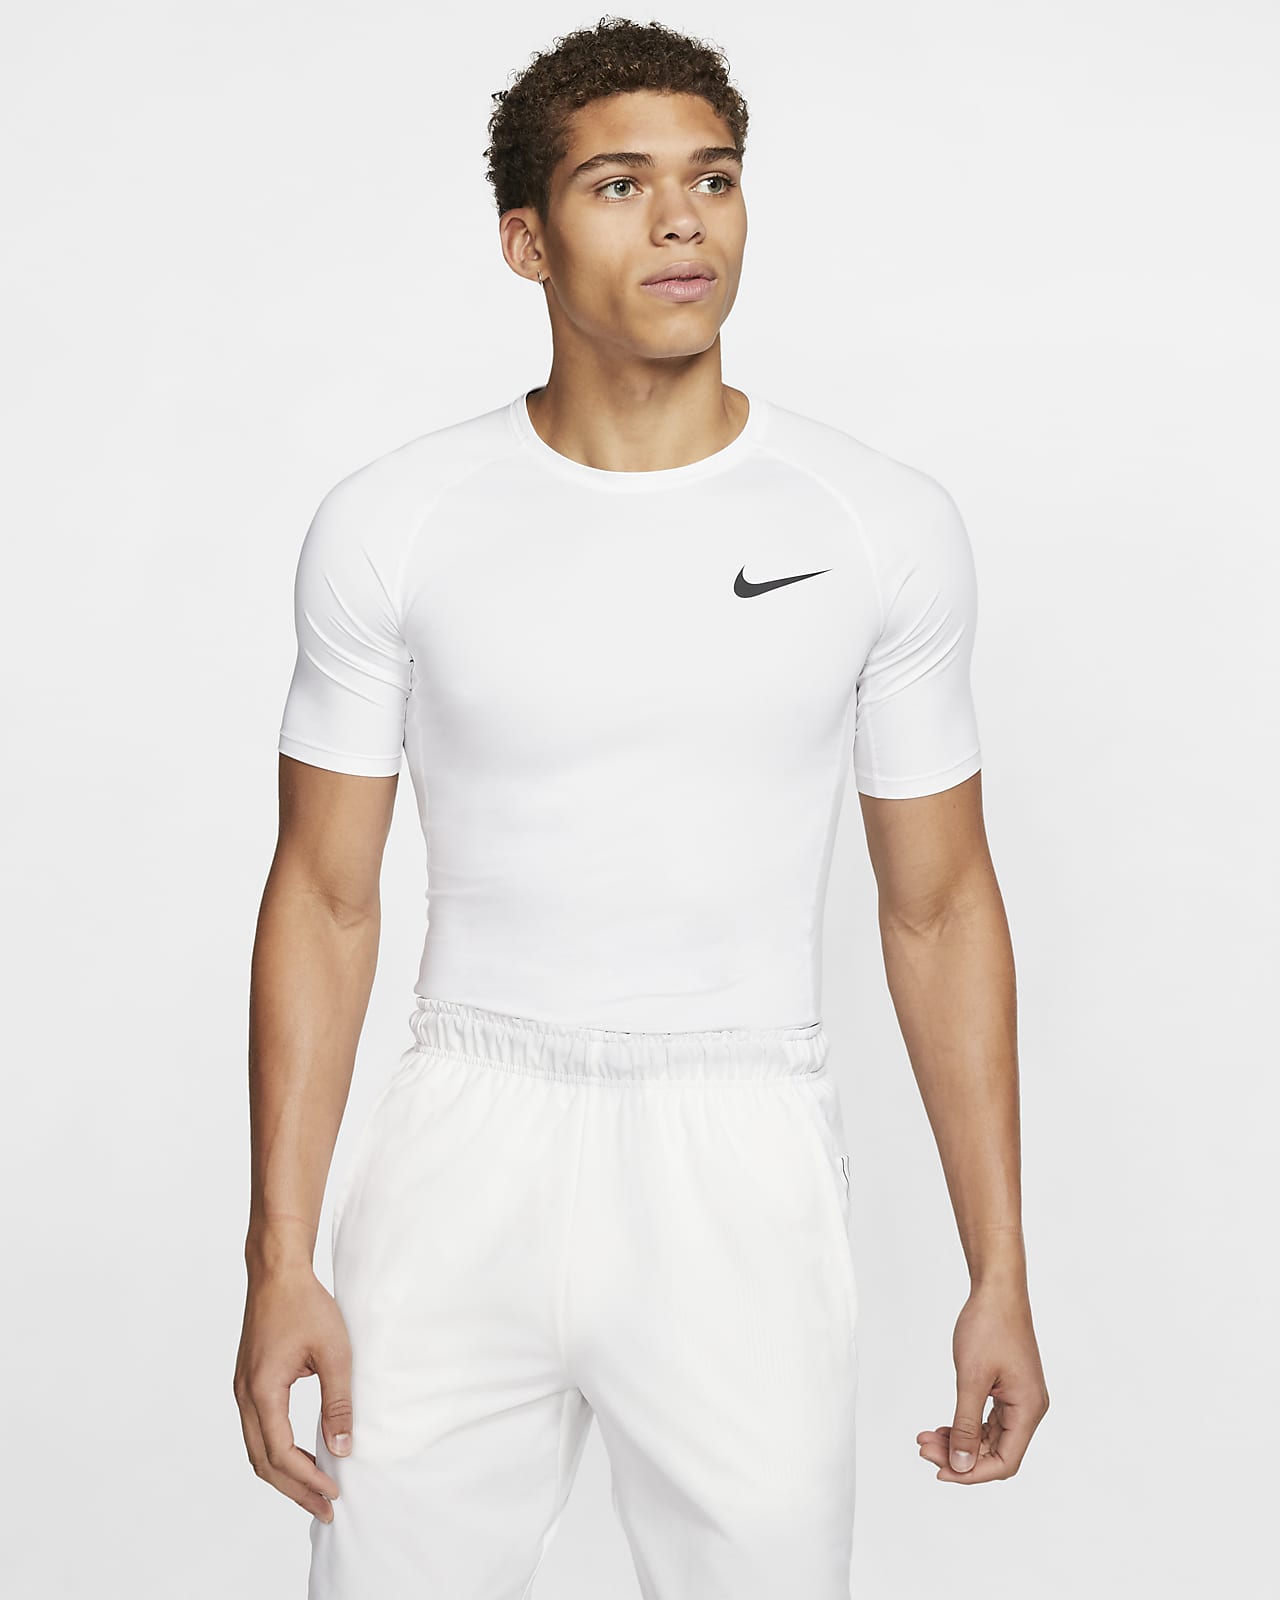 Tight-Fit Short-Sleeve Top. Nike LU